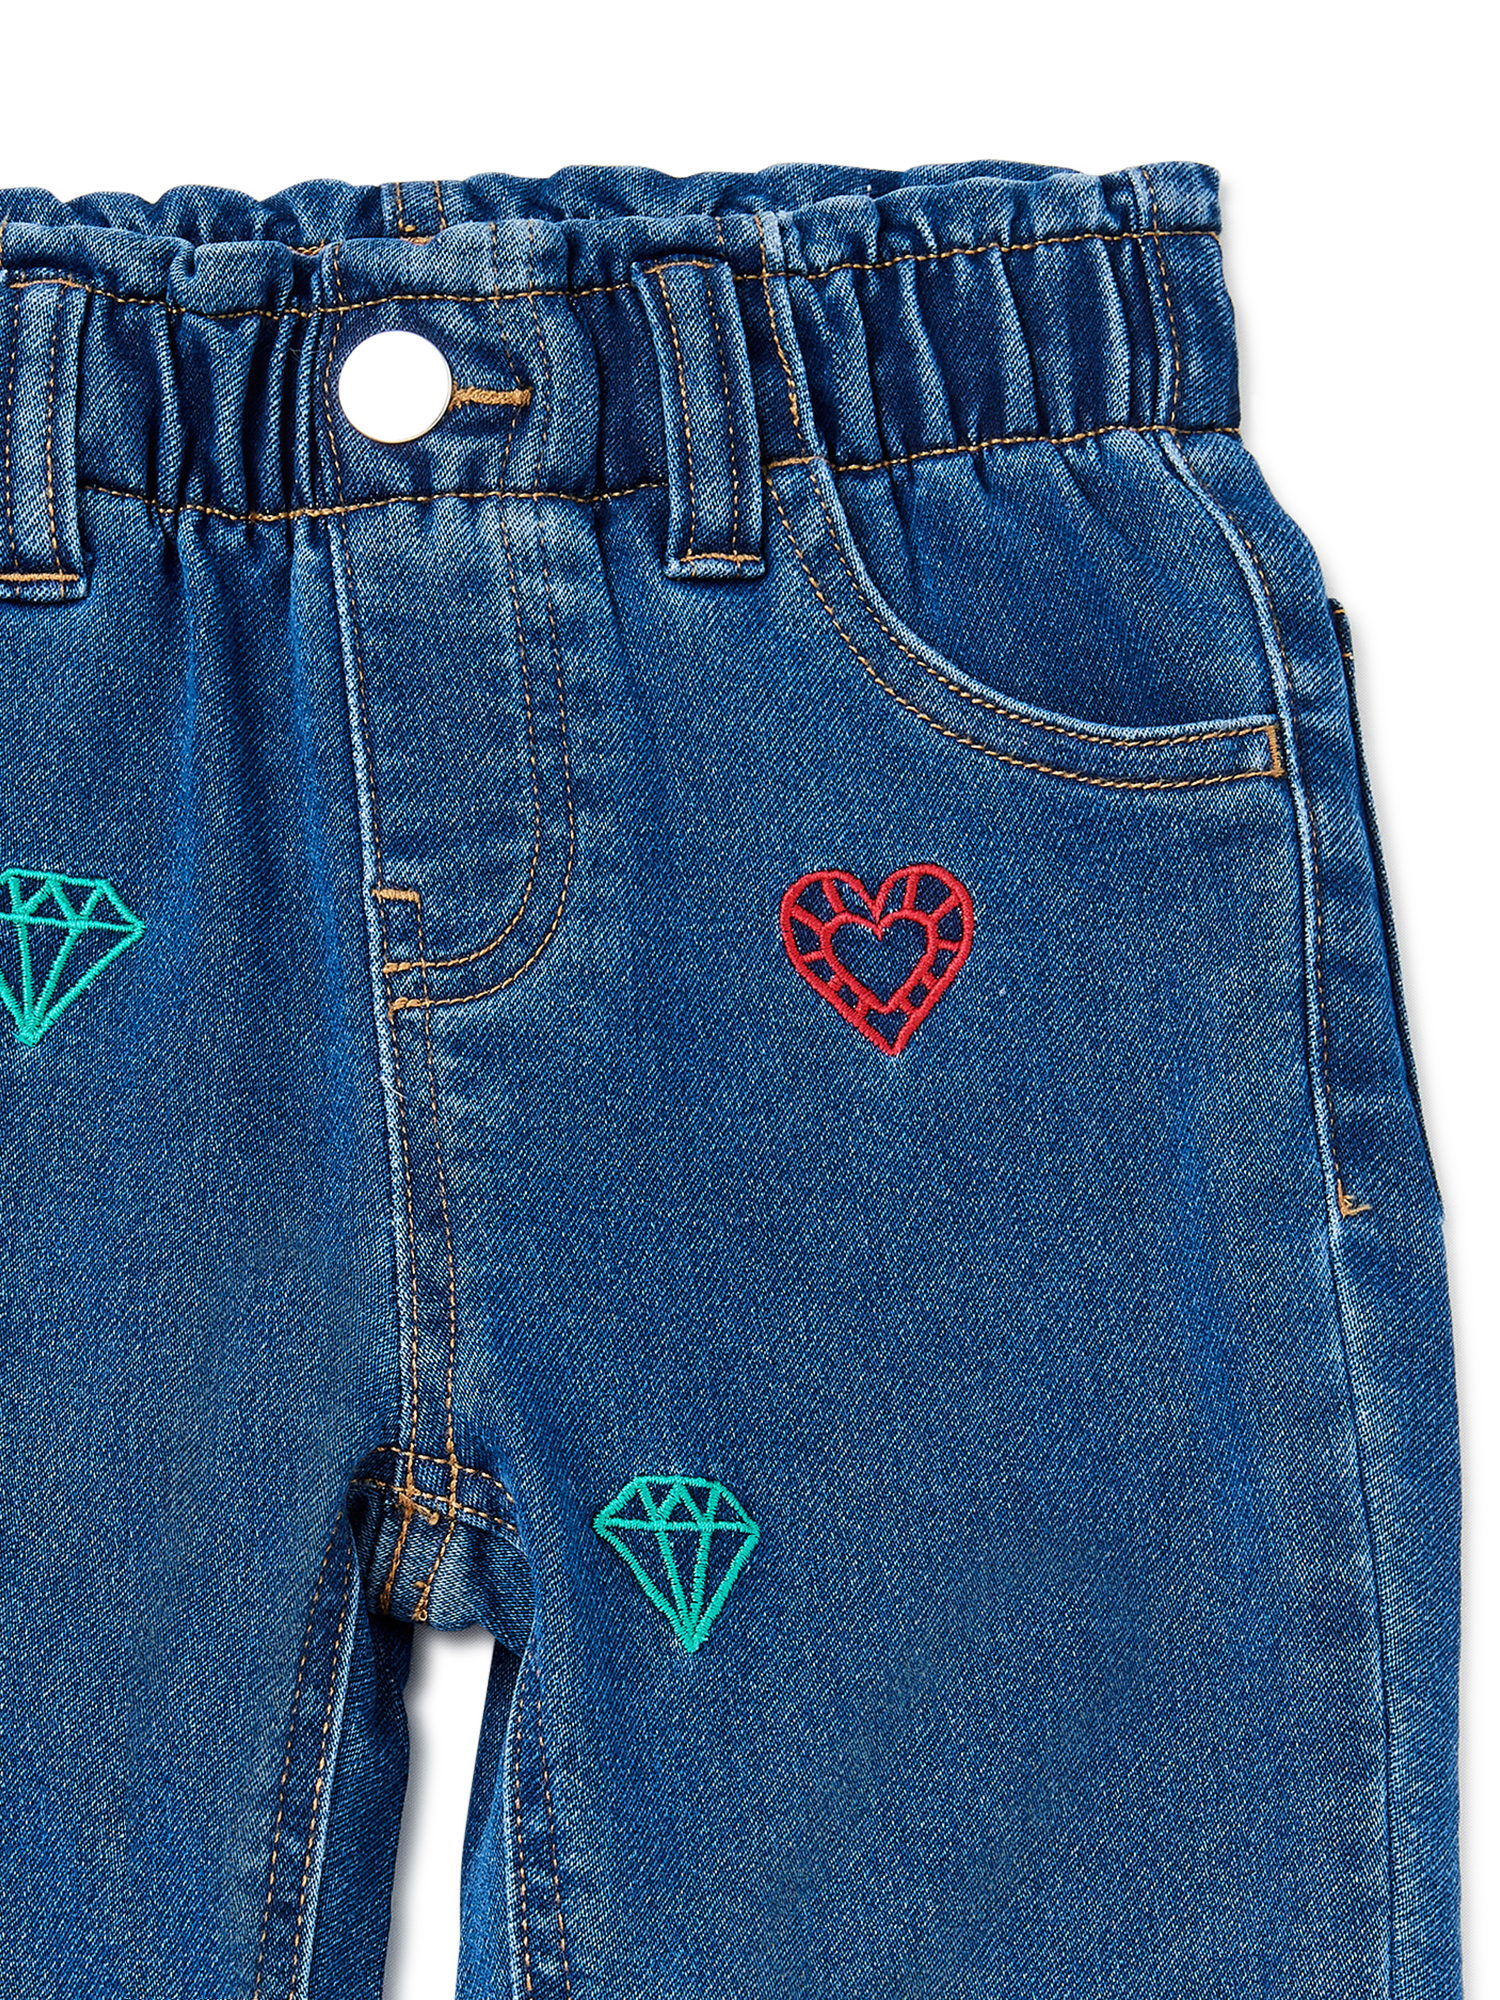 365 Kids from Garanimals Girls' Paperbag Waist Jeans, Sizes 4-10 - image 3 of 3